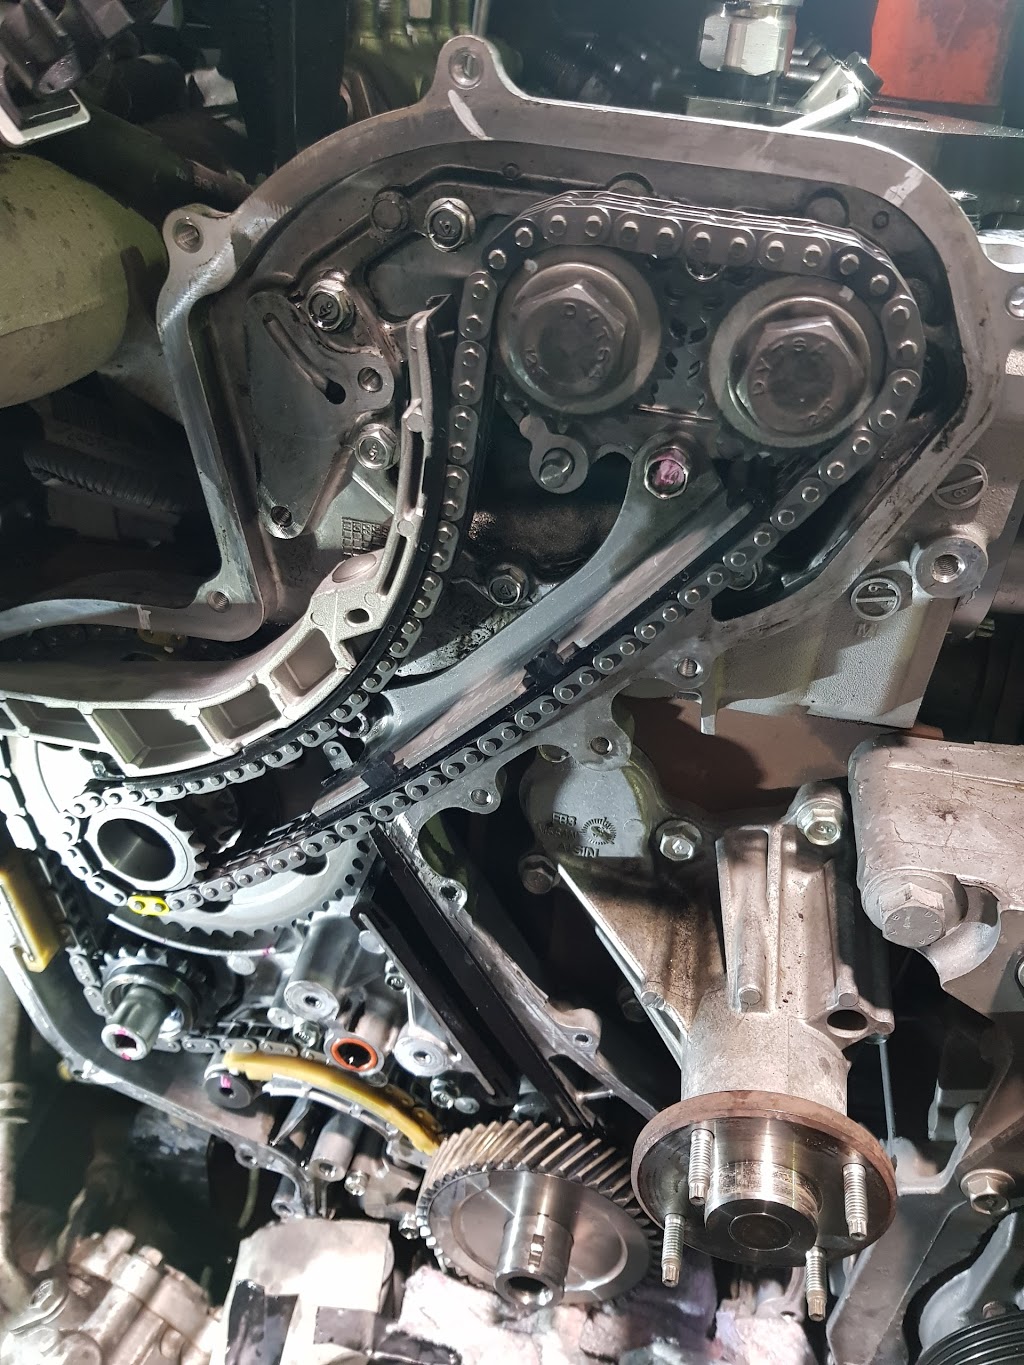 ABS AUTO MIDLAND | car repair | 6 Lloyd St, Midland WA 6056, Australia | 0861614636 OR +61 8 6161 4636